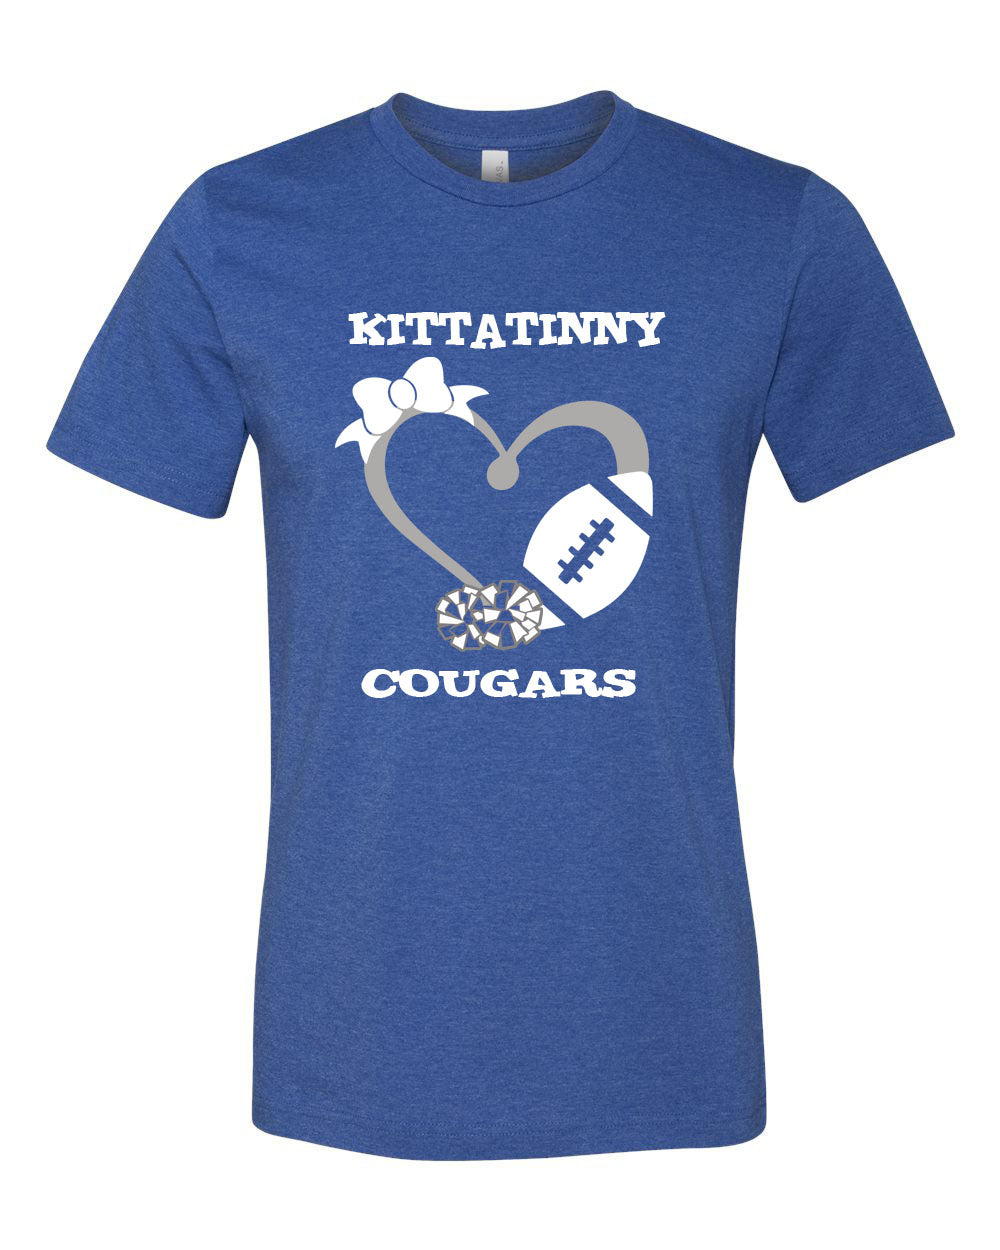 Kittatinny Cheer Design 3 t-Shirt